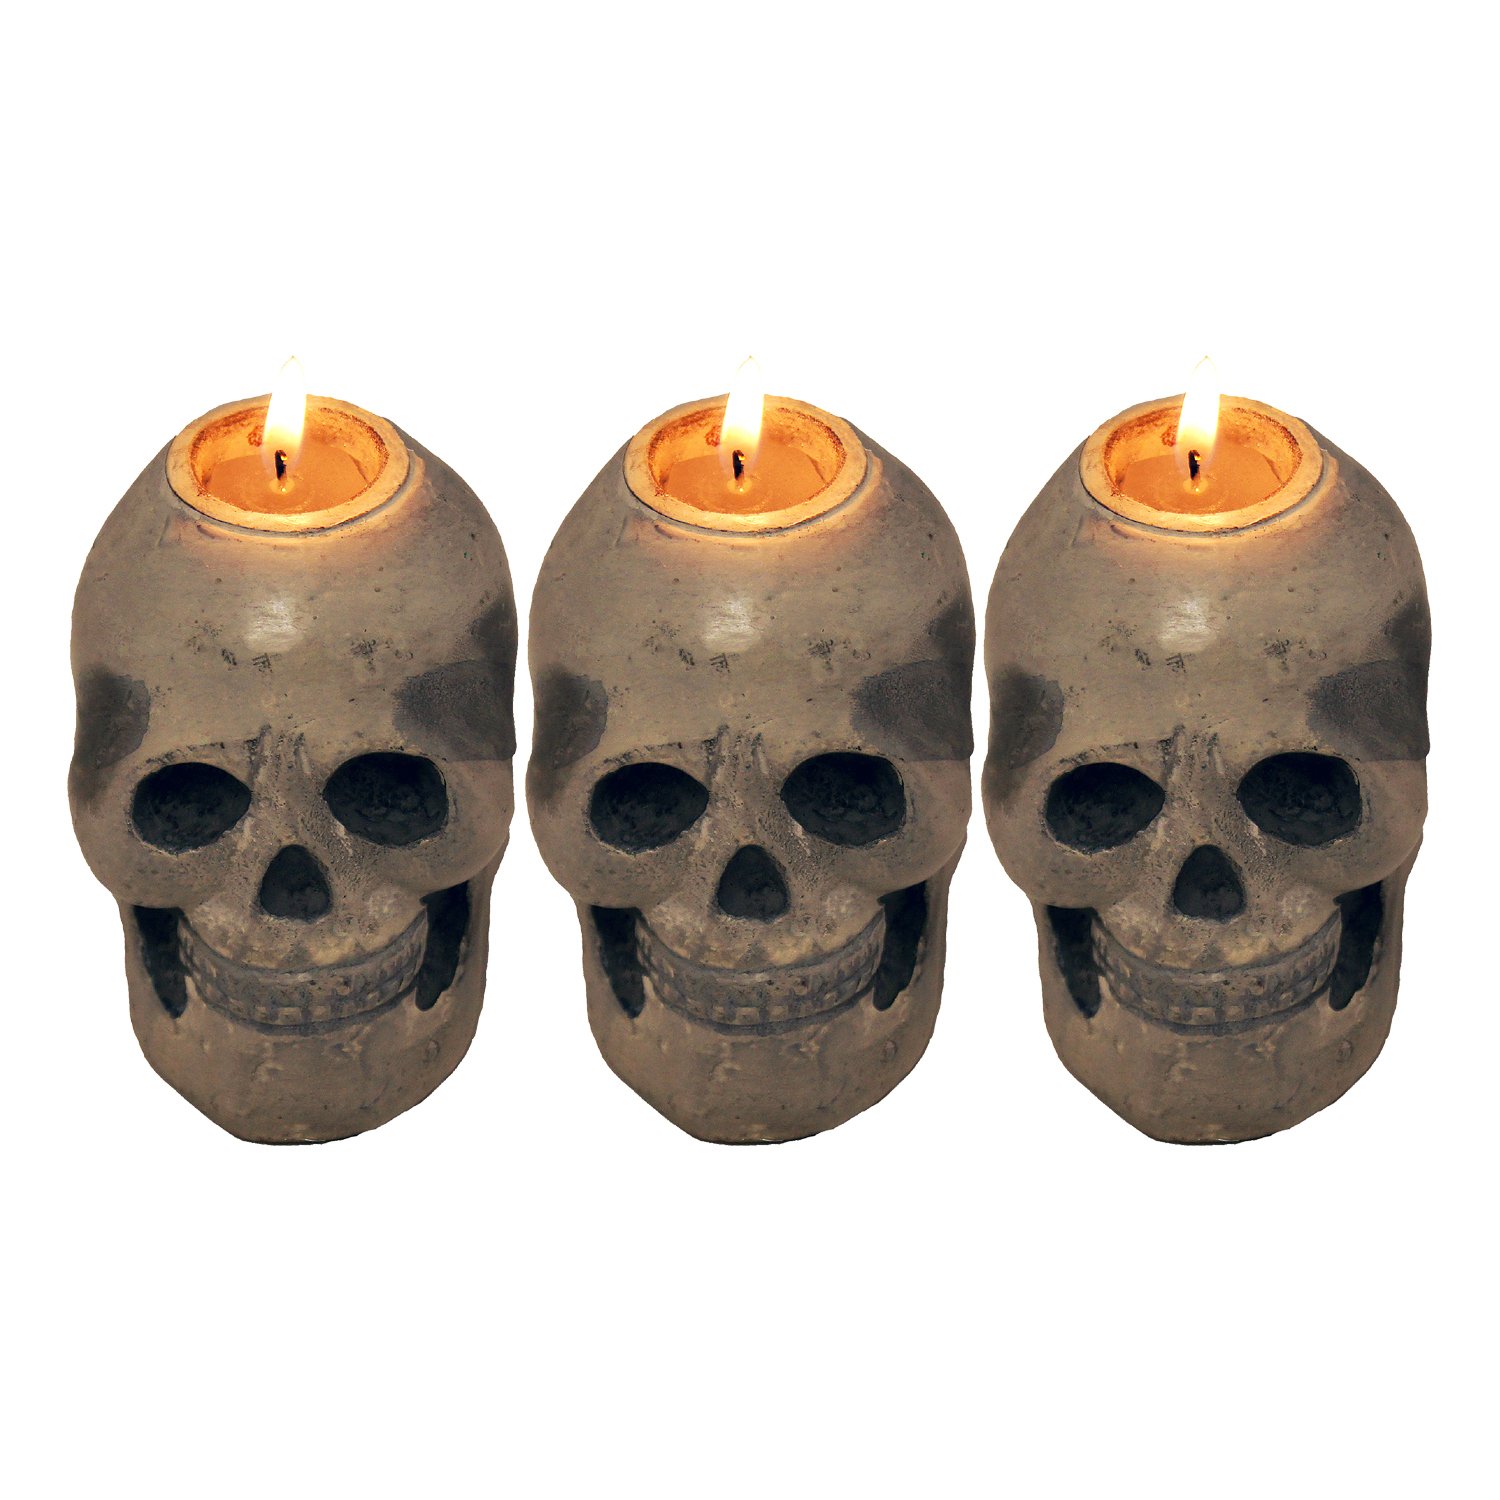 GiftBay Metallic Skeleton Skull Votive Candle Holders Set of 3 Pieces,